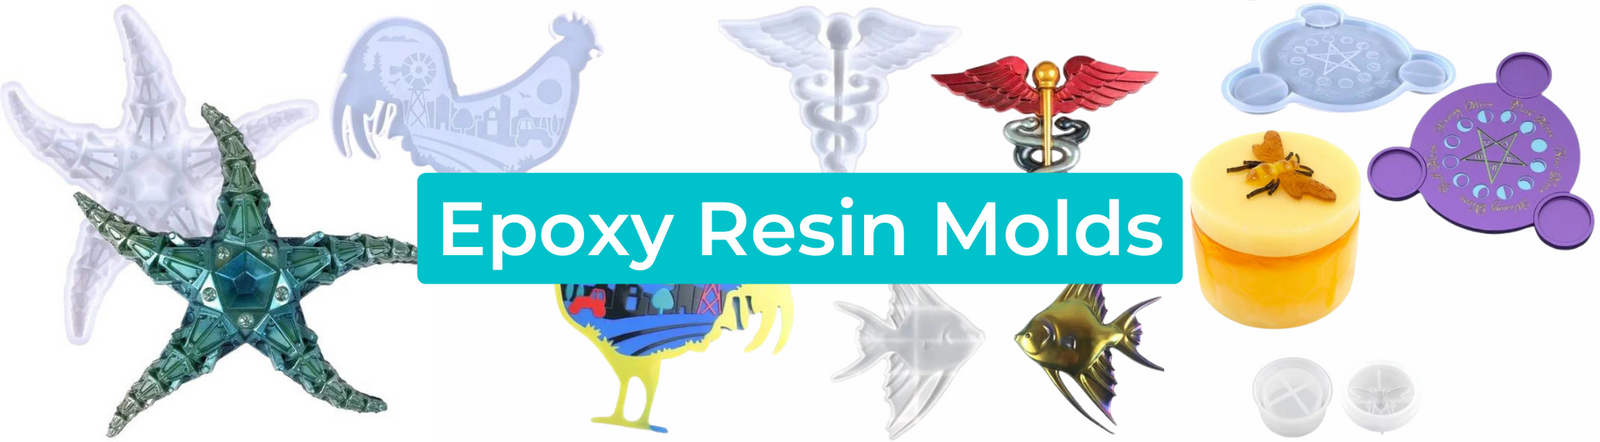 Epoxy Resin Molds - Resin Rockers